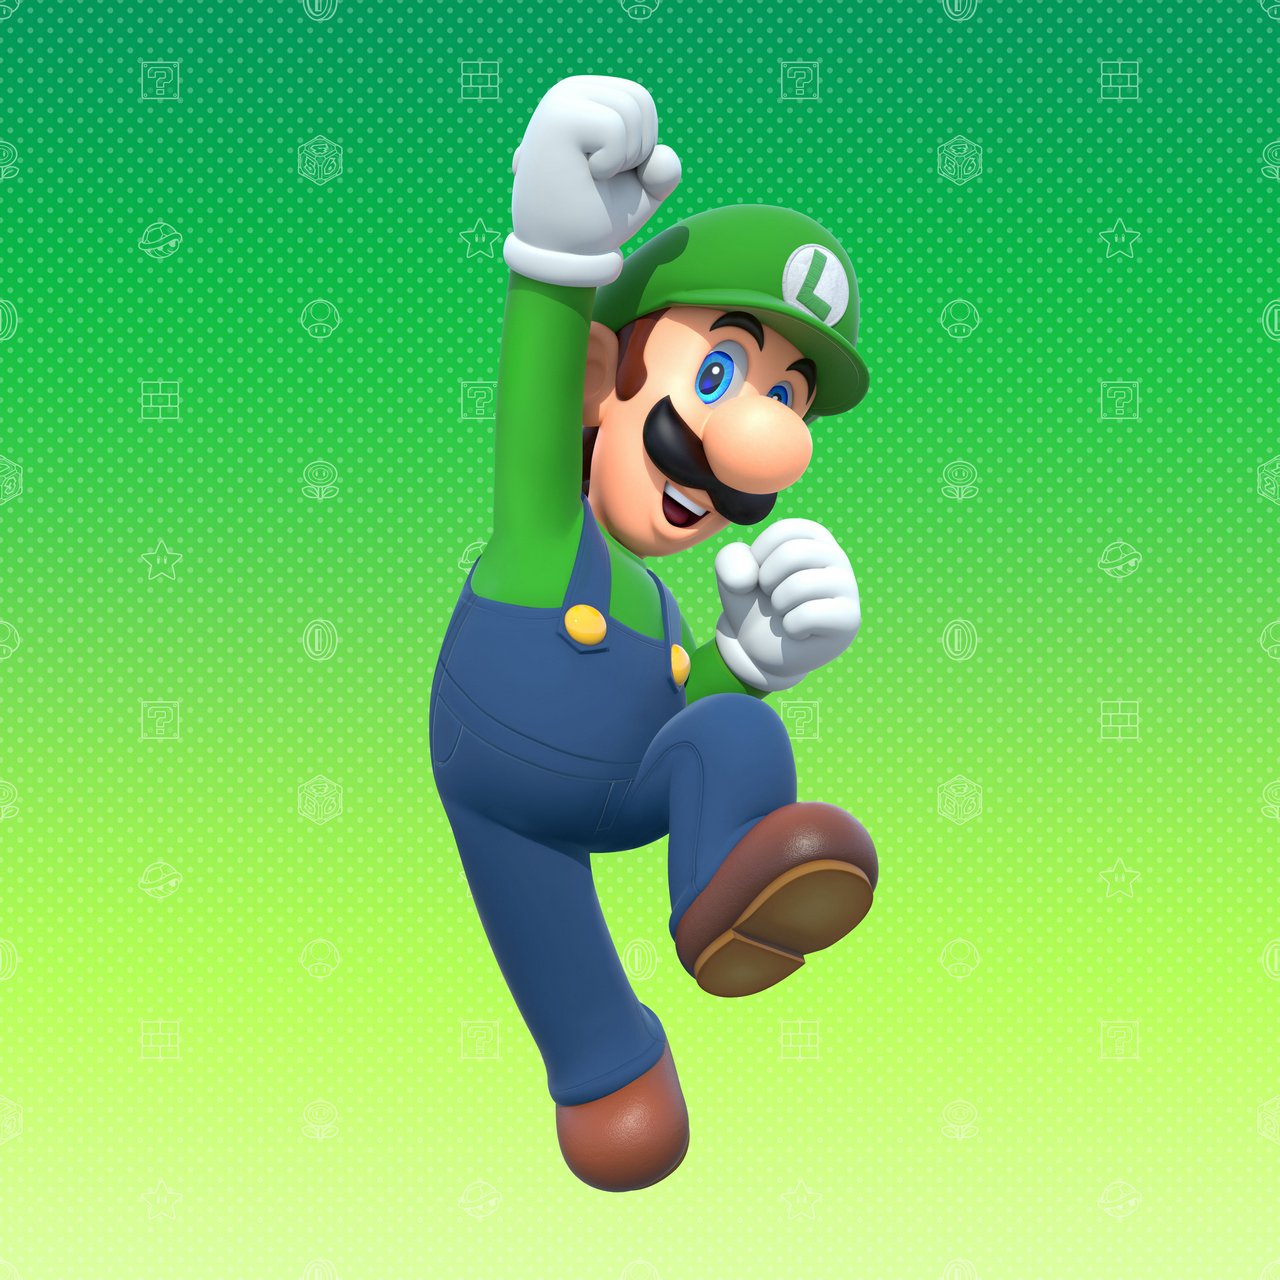 Mario_Party_10_Luigi.jpg